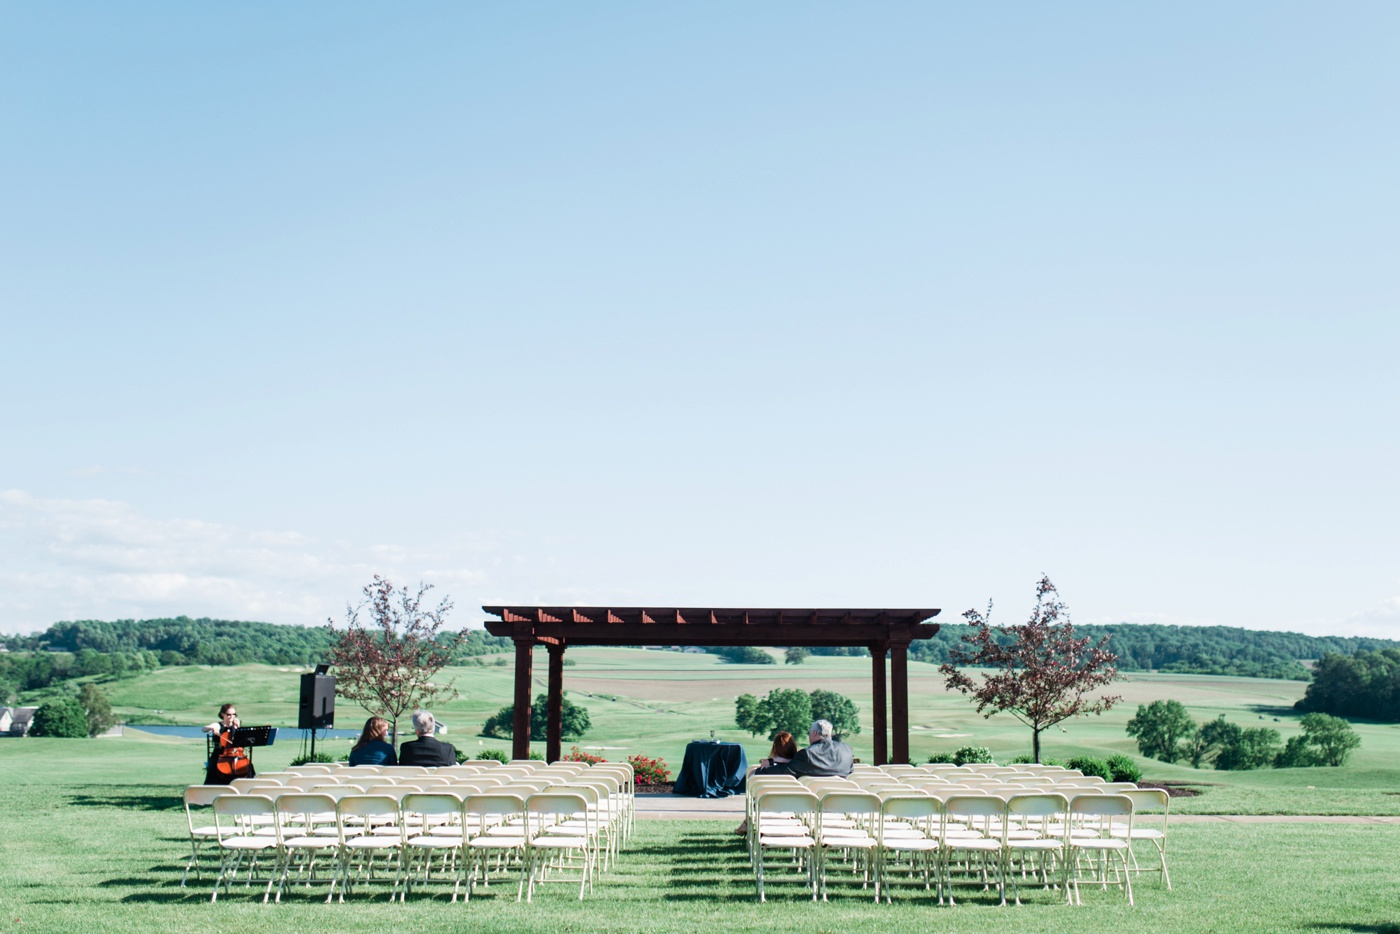 Kristen + Josh - Olde Homestead Golf Club Wedding Ceremony - New Tripoli Pennsylvania Photographer - Alison Dunn Photography